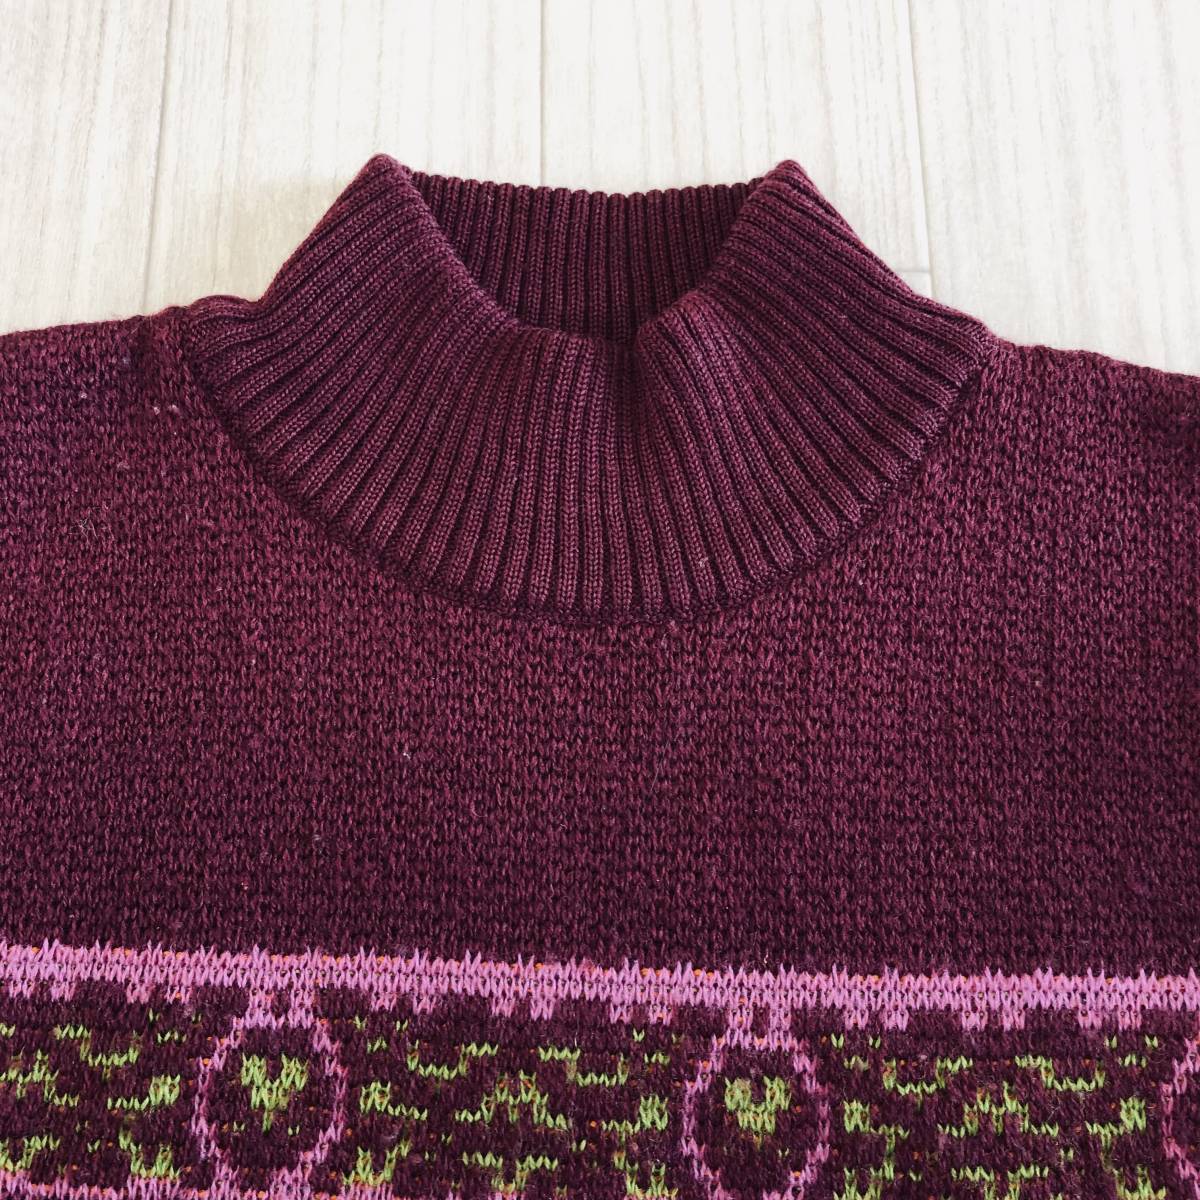 AS0228 UNITED COLORS OF BENETTON Benetton tops sweater knitted high‐necked 46 purple purple orange orange floral print wool botanikaru autumn winter 